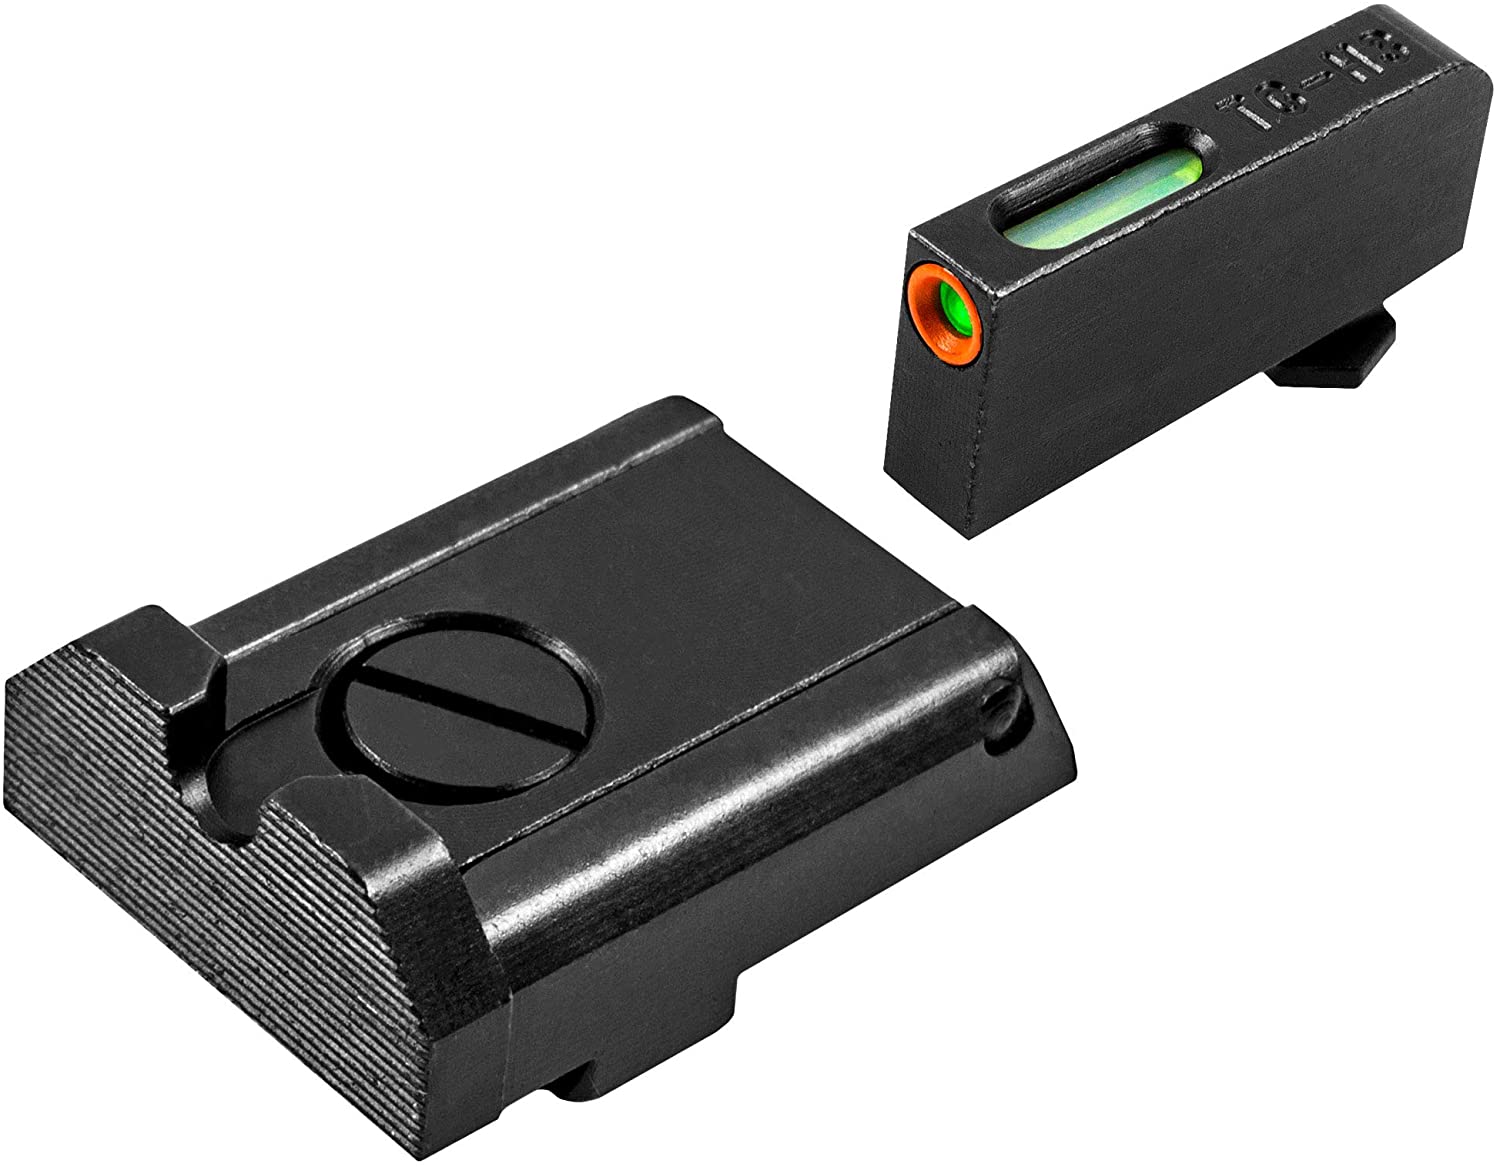 TRUGLO - TFX Pro Tritium and Fiber Optic Xtreme Hangun Sights for Glock Pistols, TFX Front, Adjustable Rear Sight